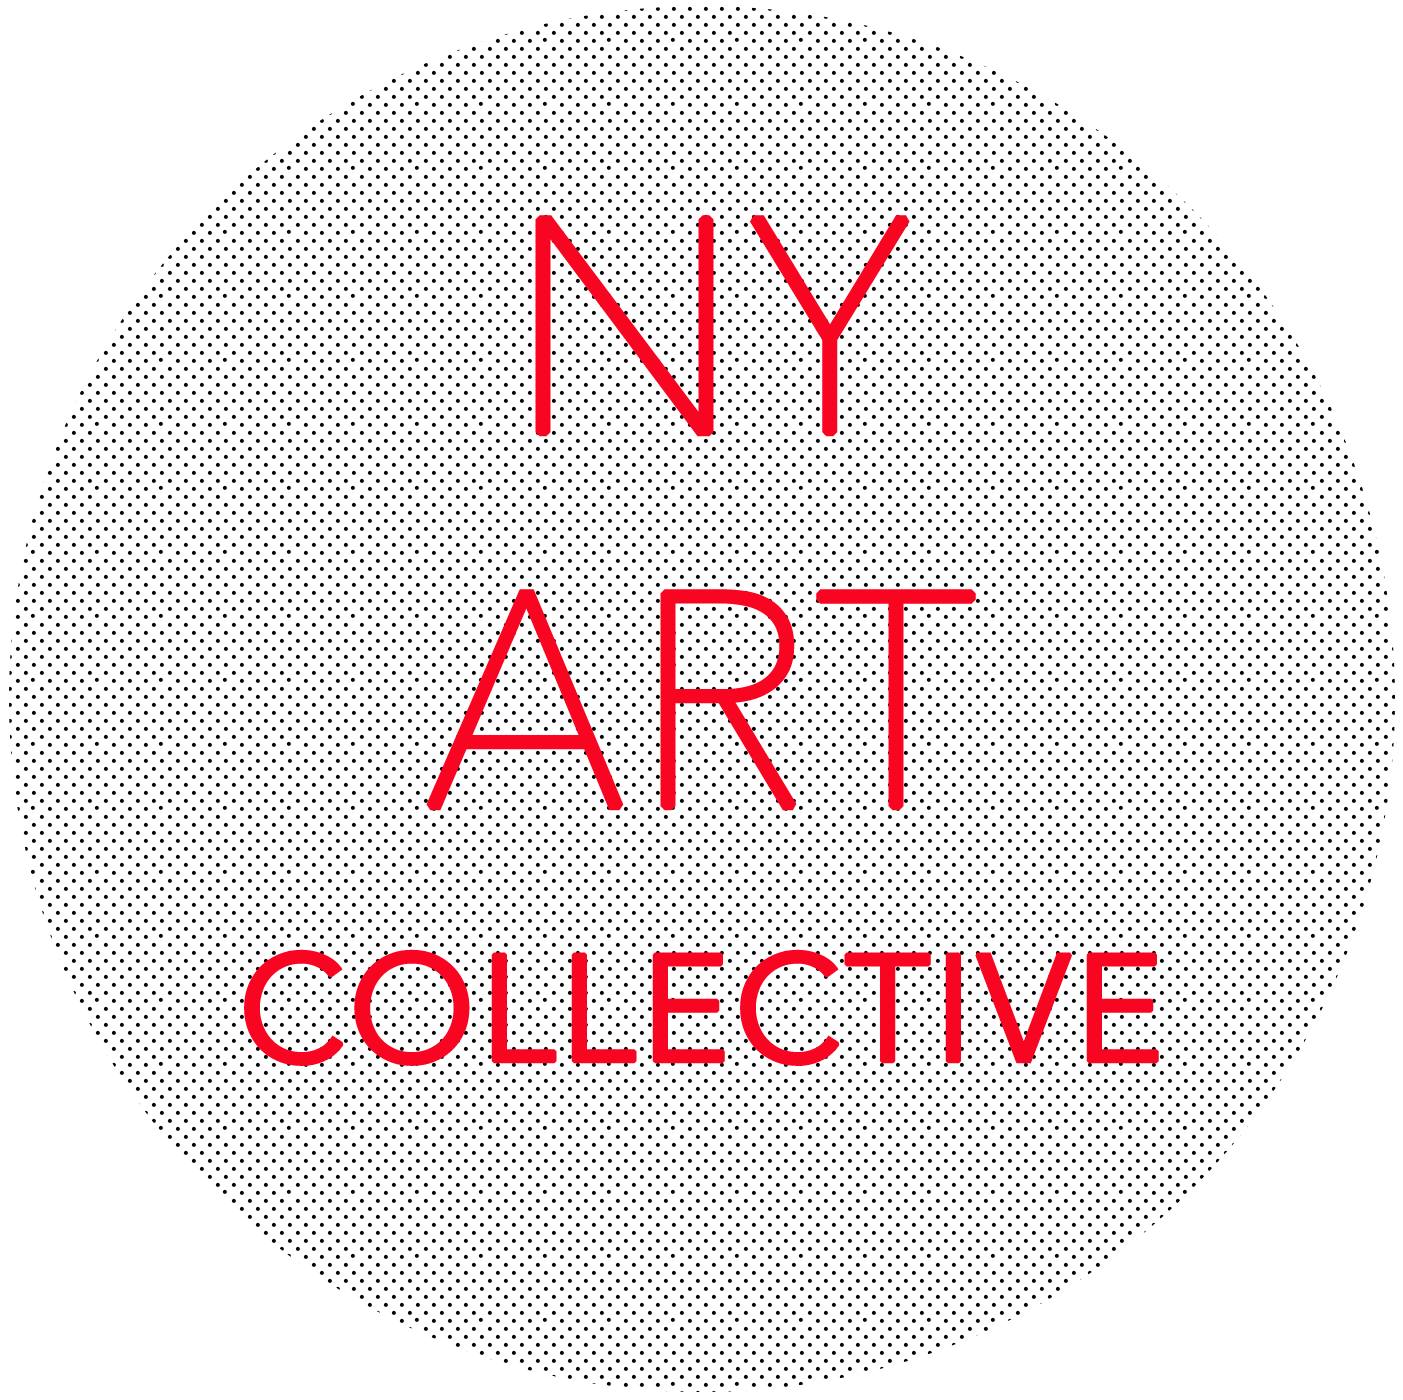 NY ART COLLECTIVE